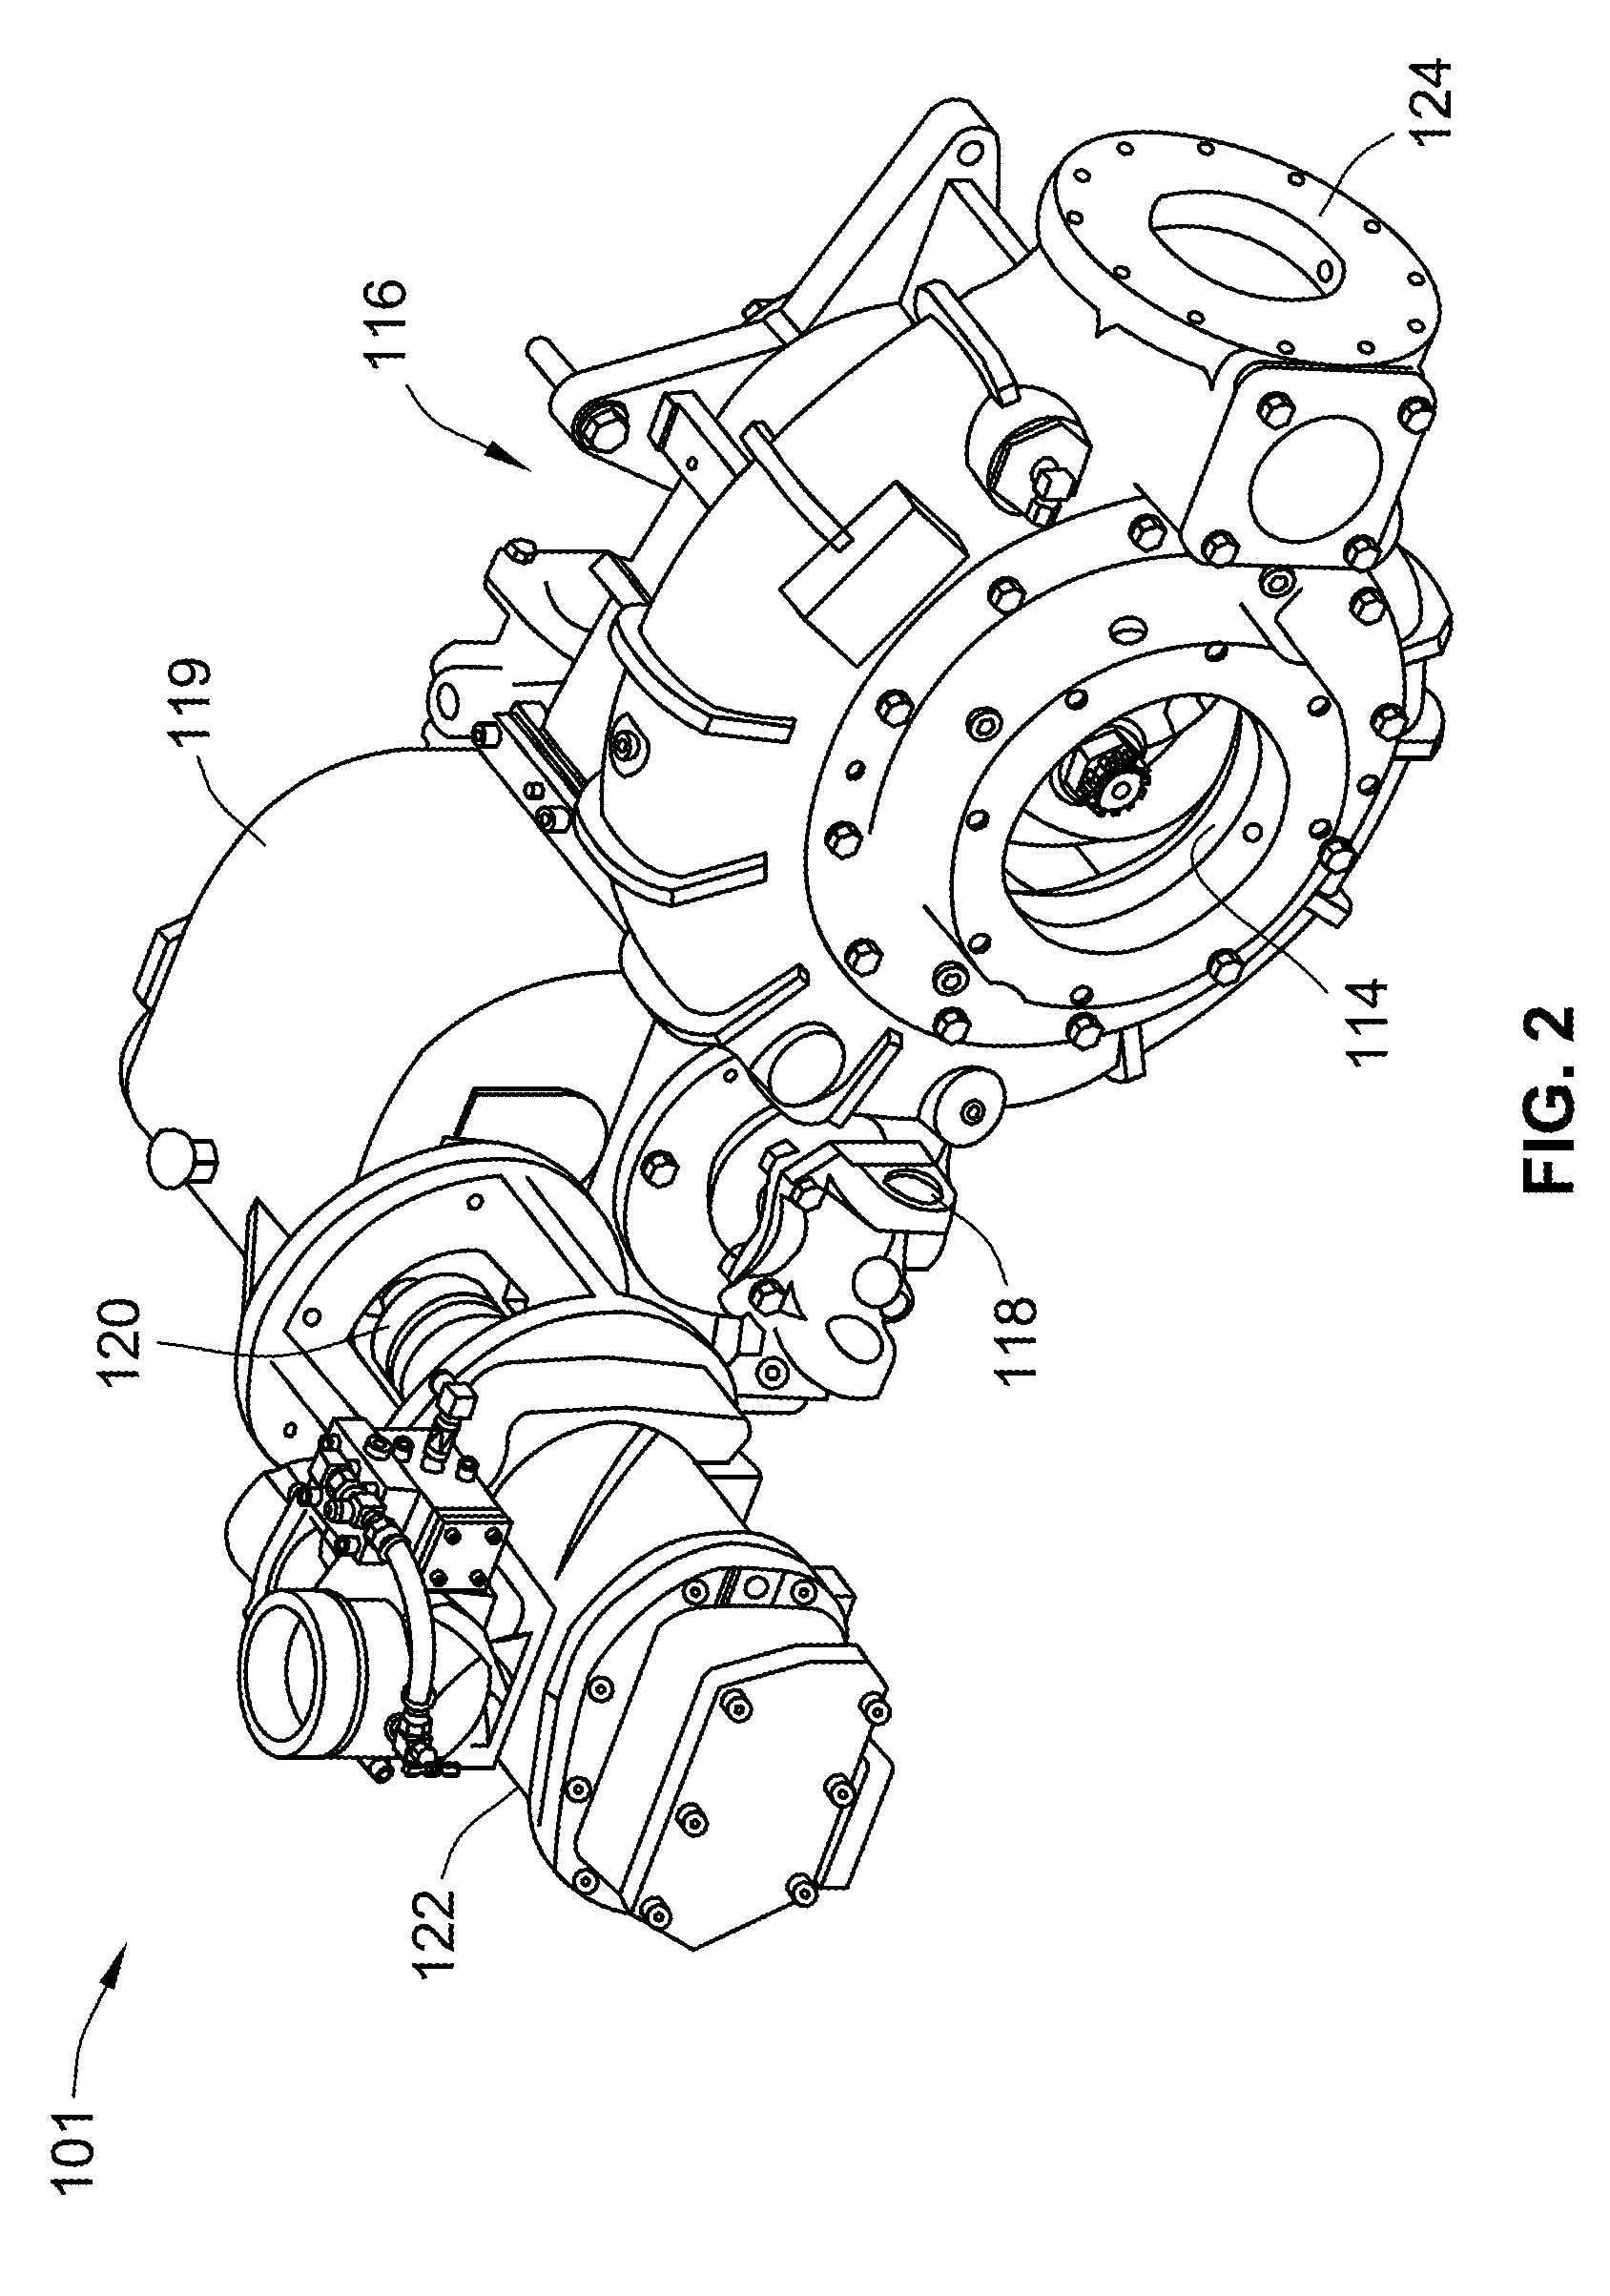 Integrated pumper apparatus